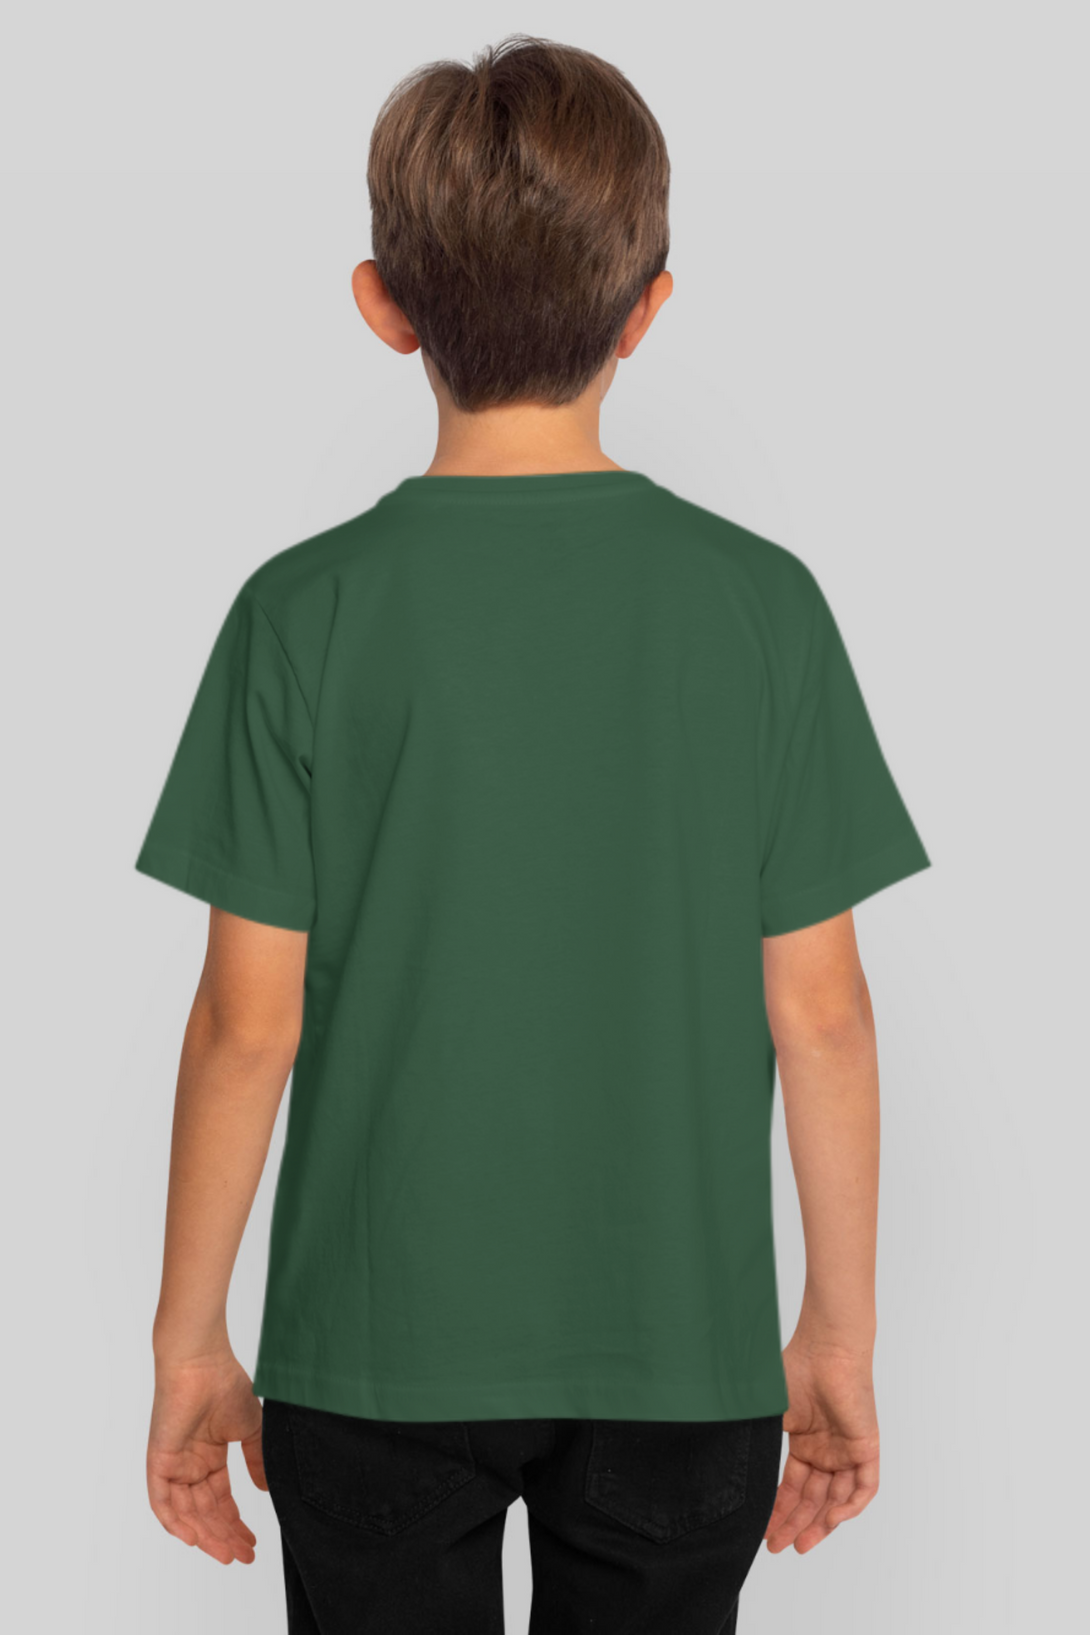 Bottle Green T-Shirt For Boy - WowWaves - 2